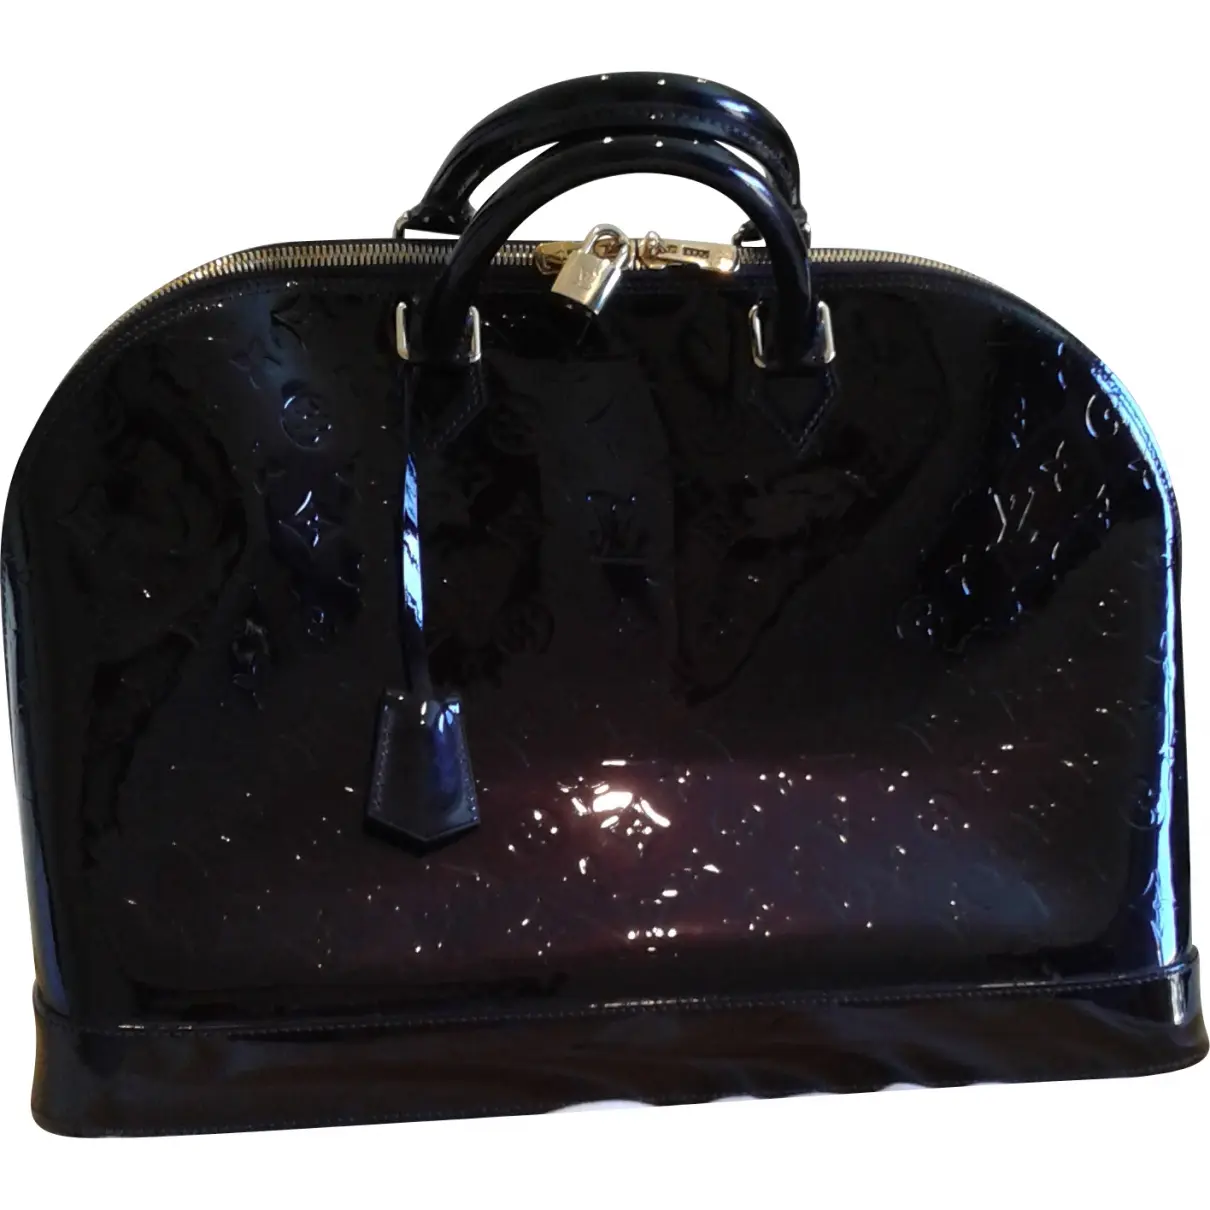 Burgundy Patent leather Handbag Alma Louis Vuitton